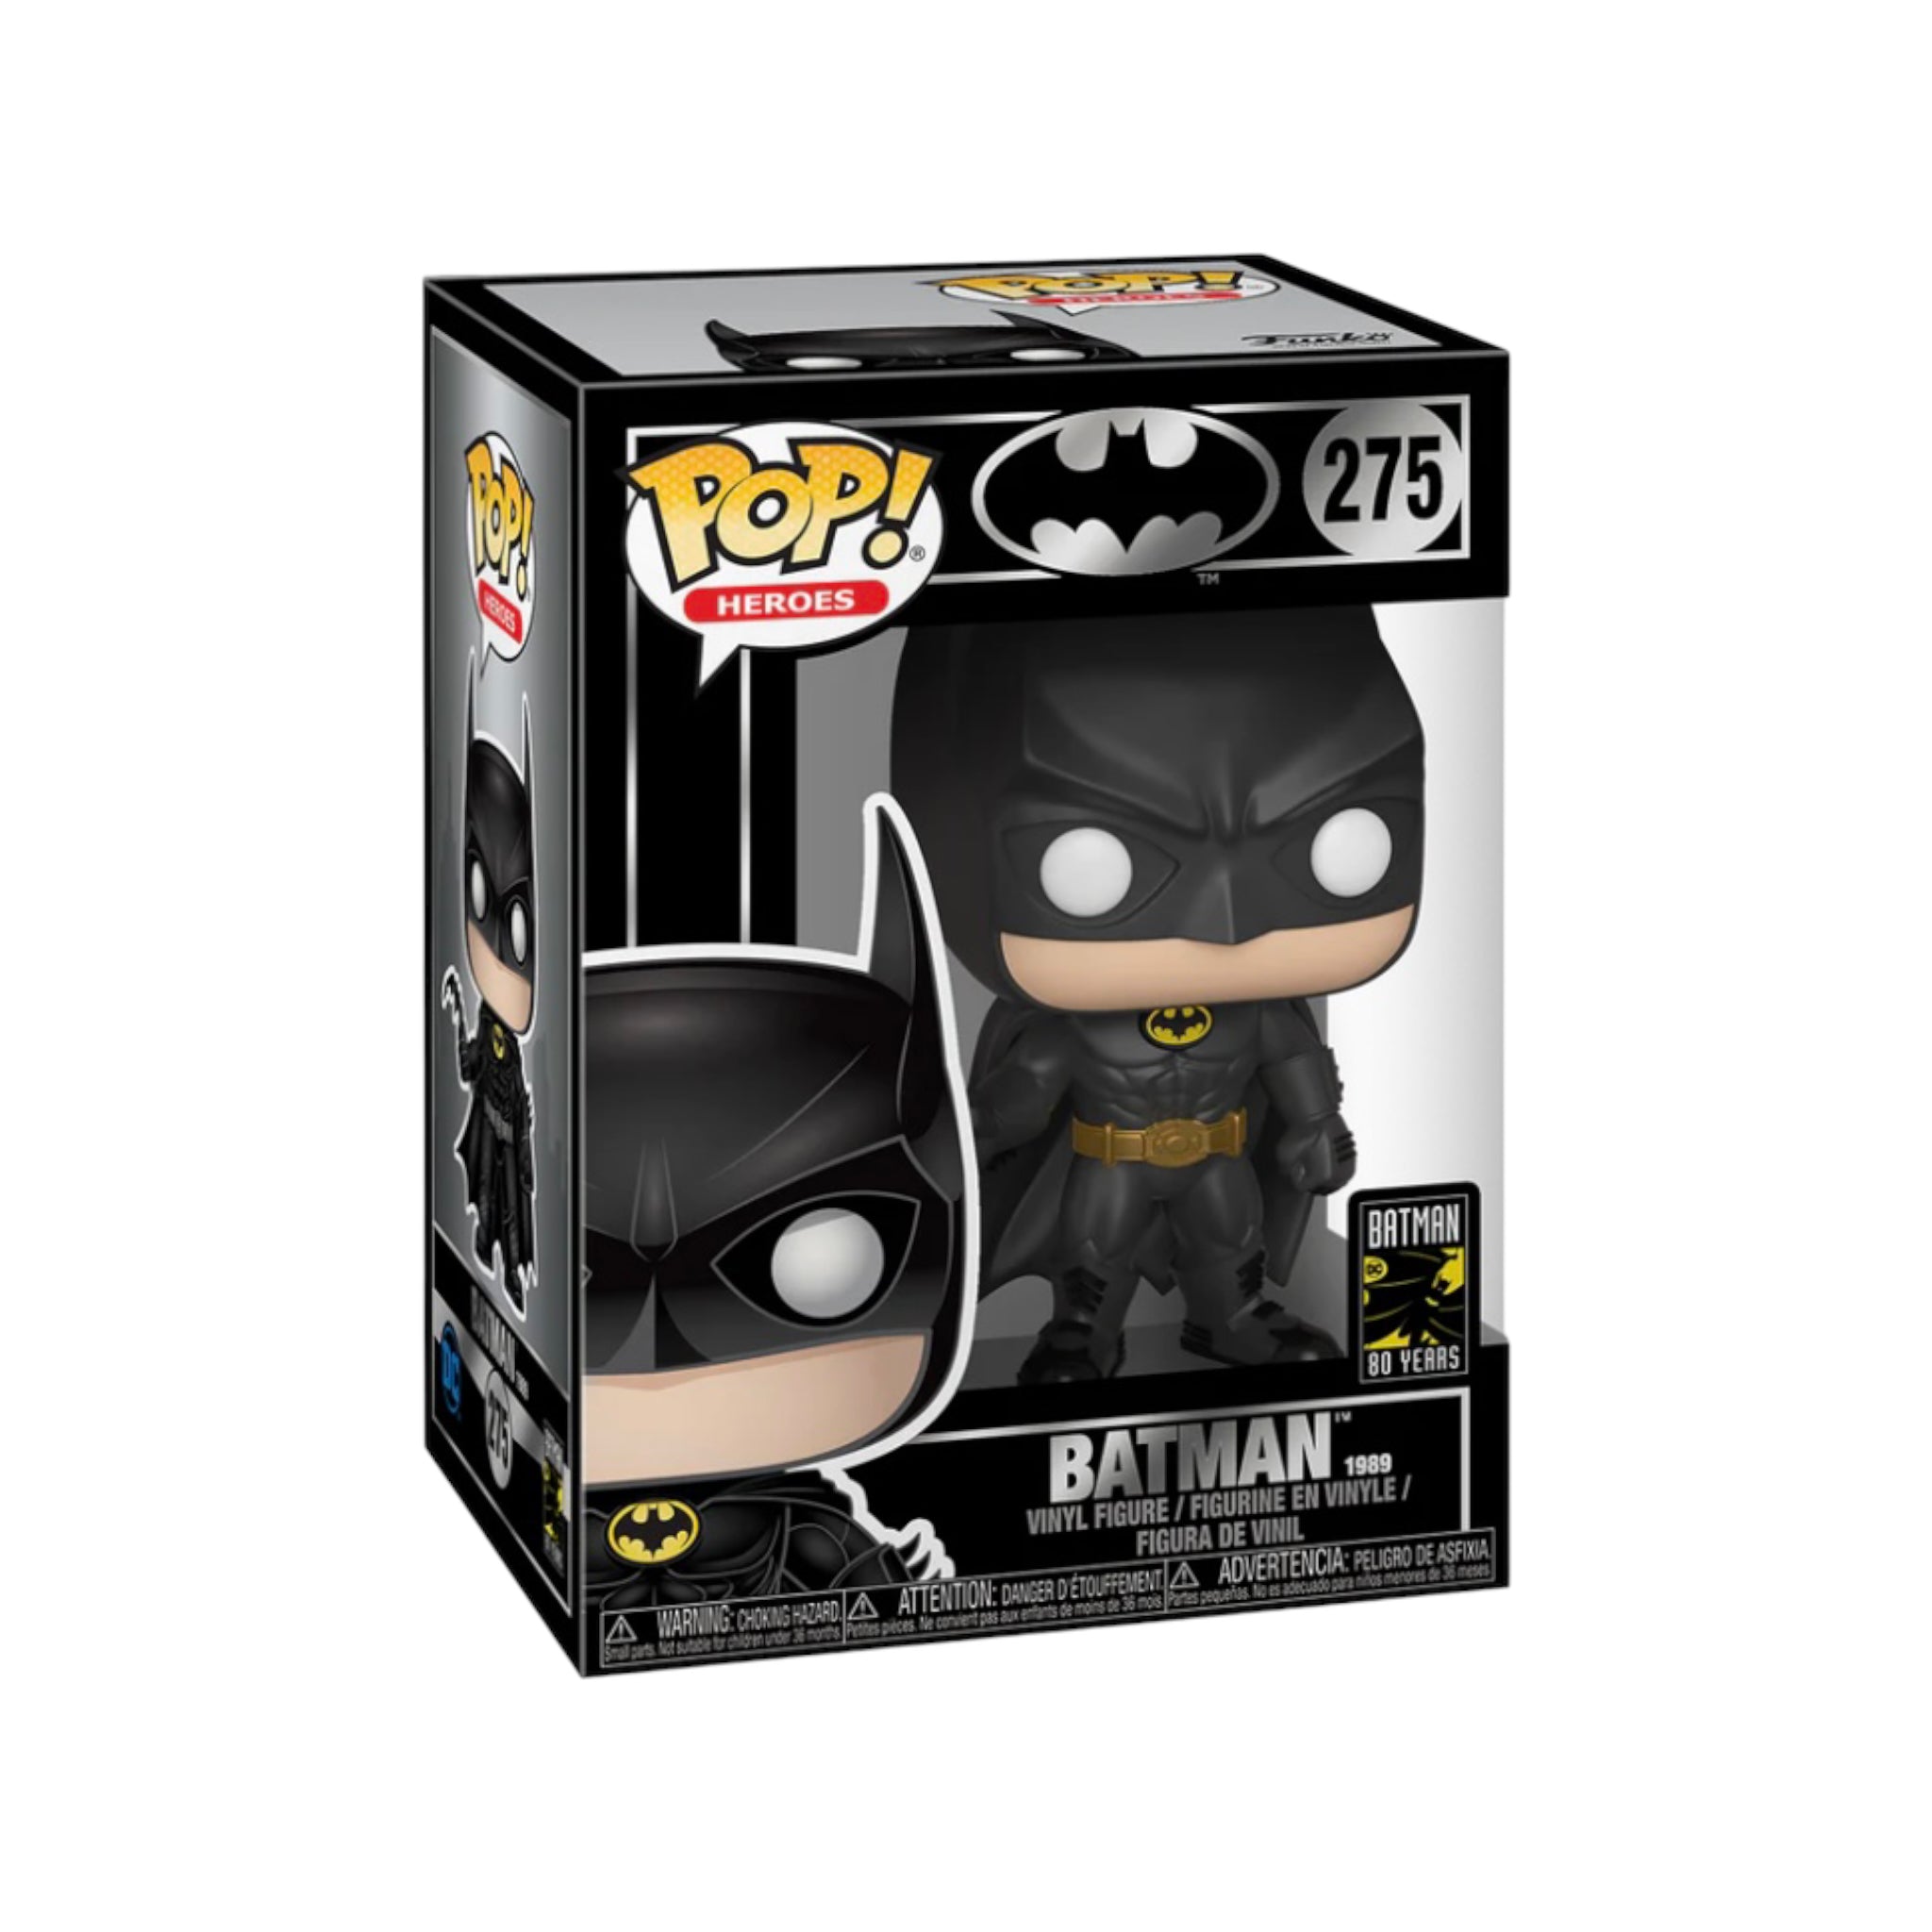 Batman 1989 #275 Funko Pop! - Batman 80th Anniversary